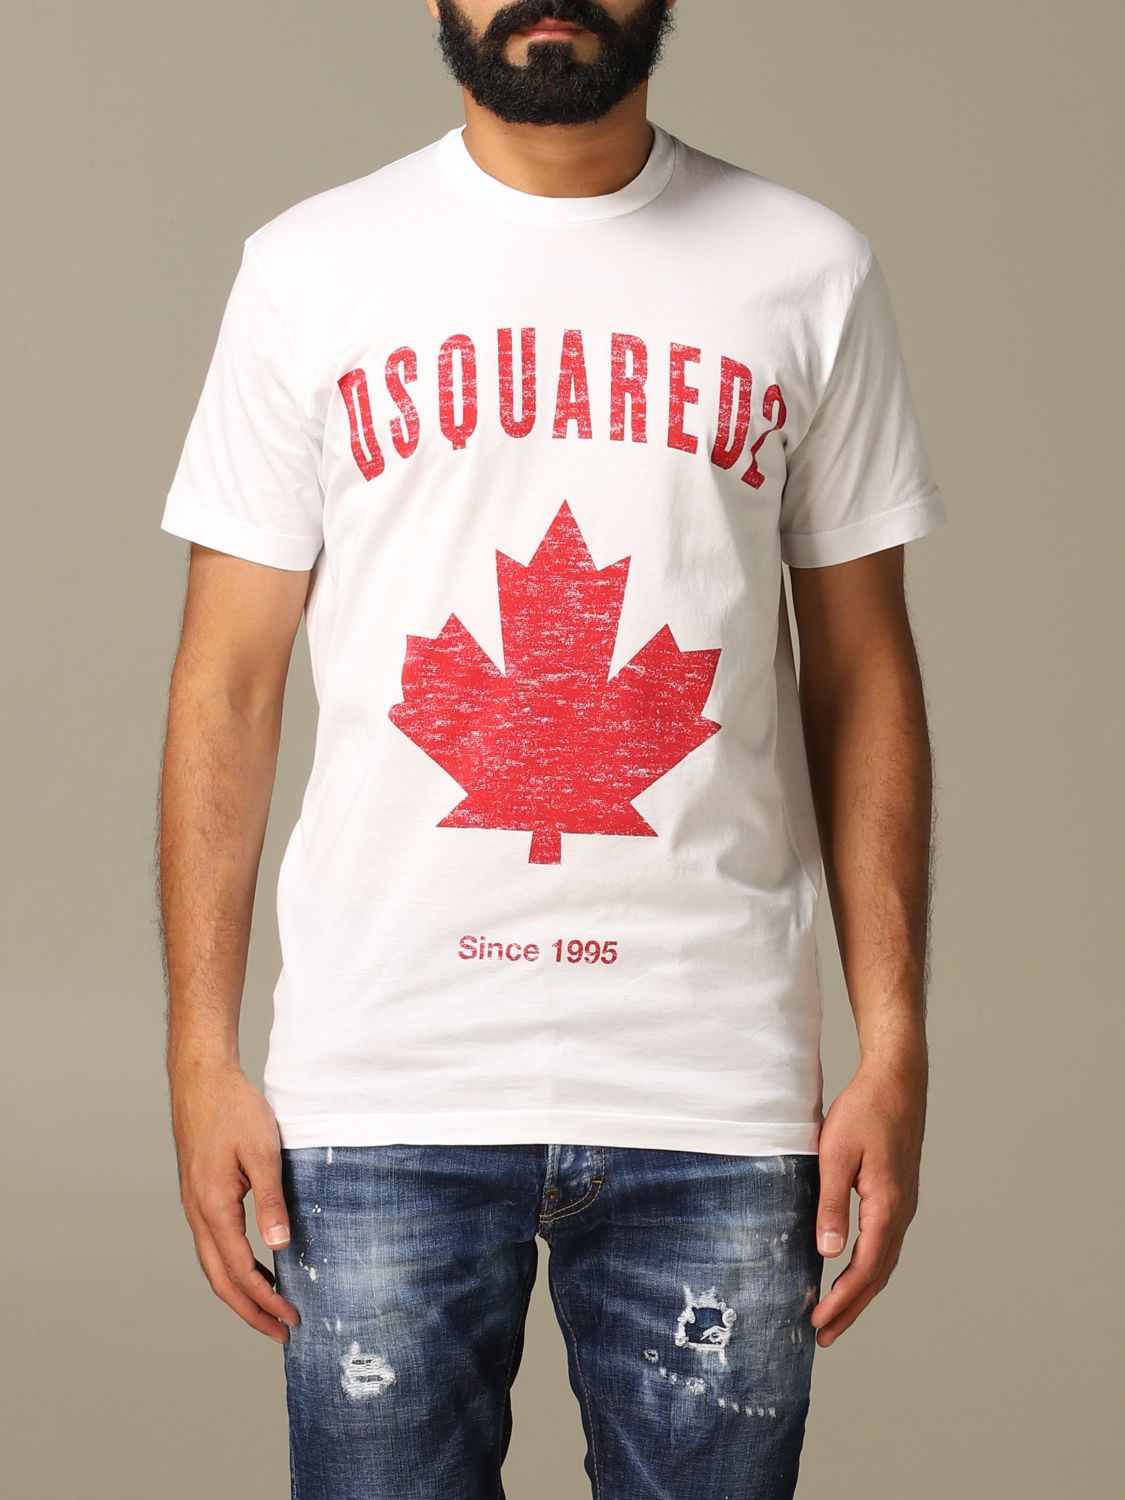 dsquared2 shirt